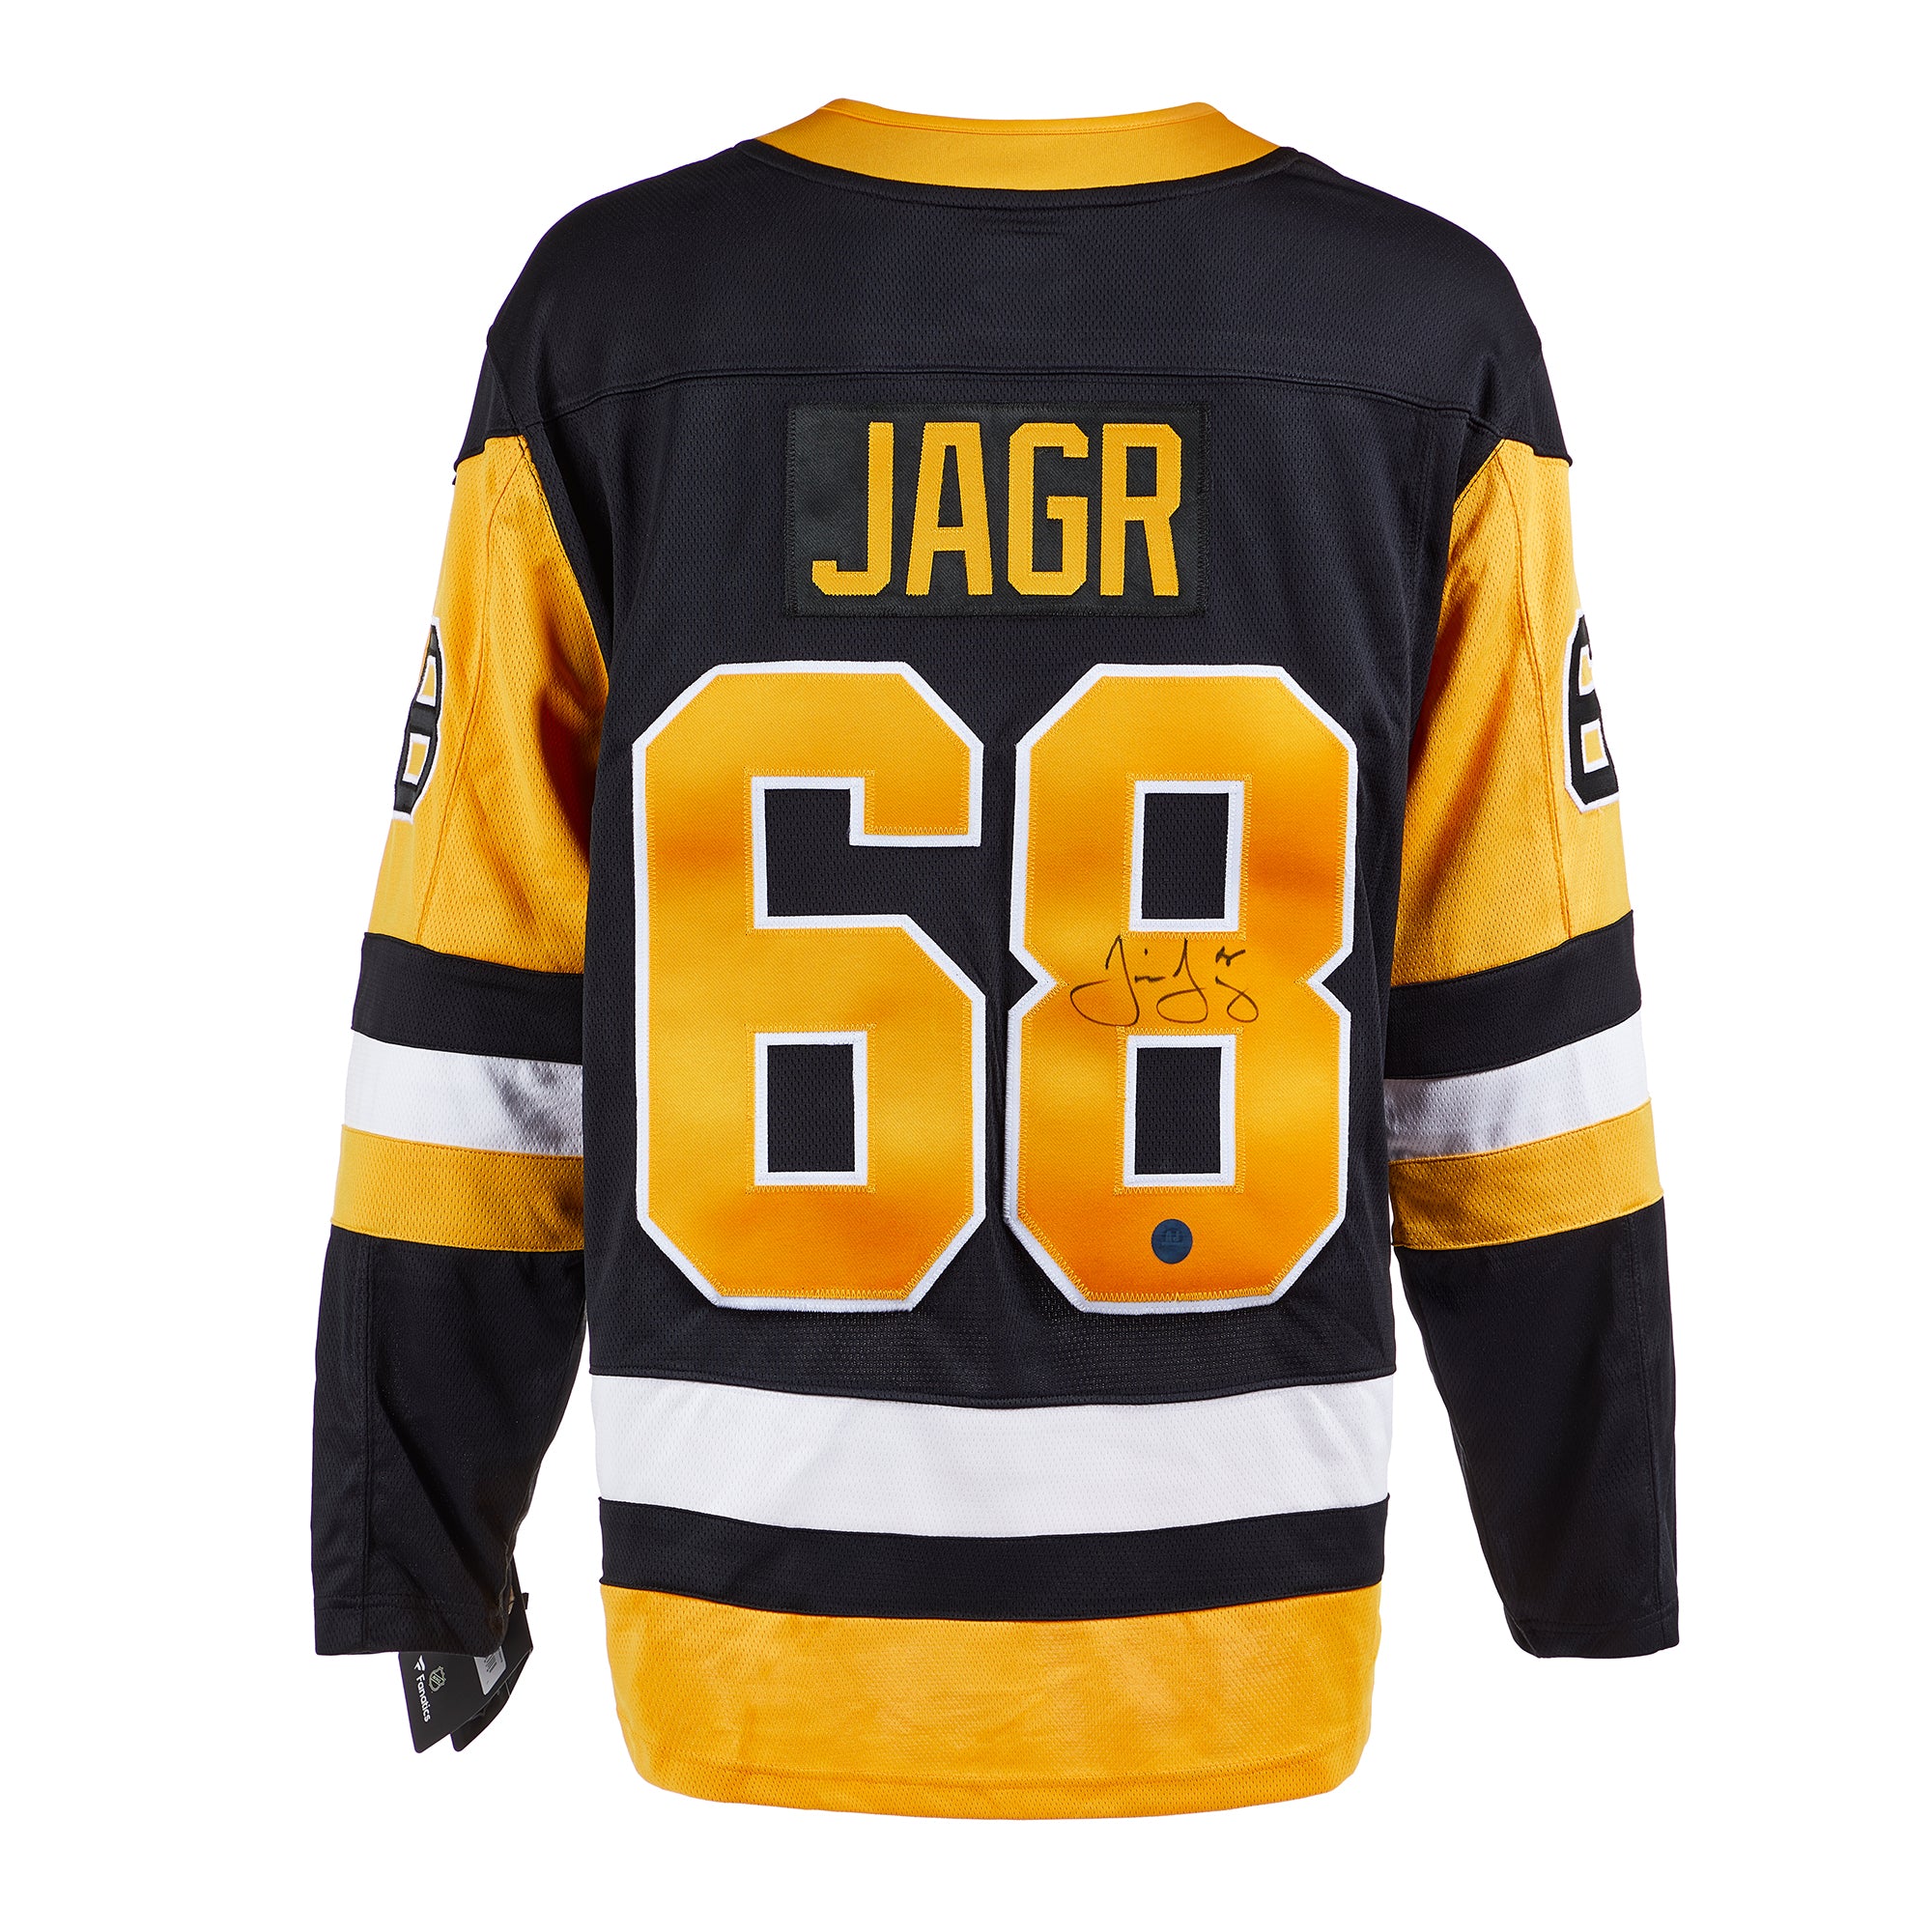 Jaromir Jagr autographed Jersey (New York Rangers)